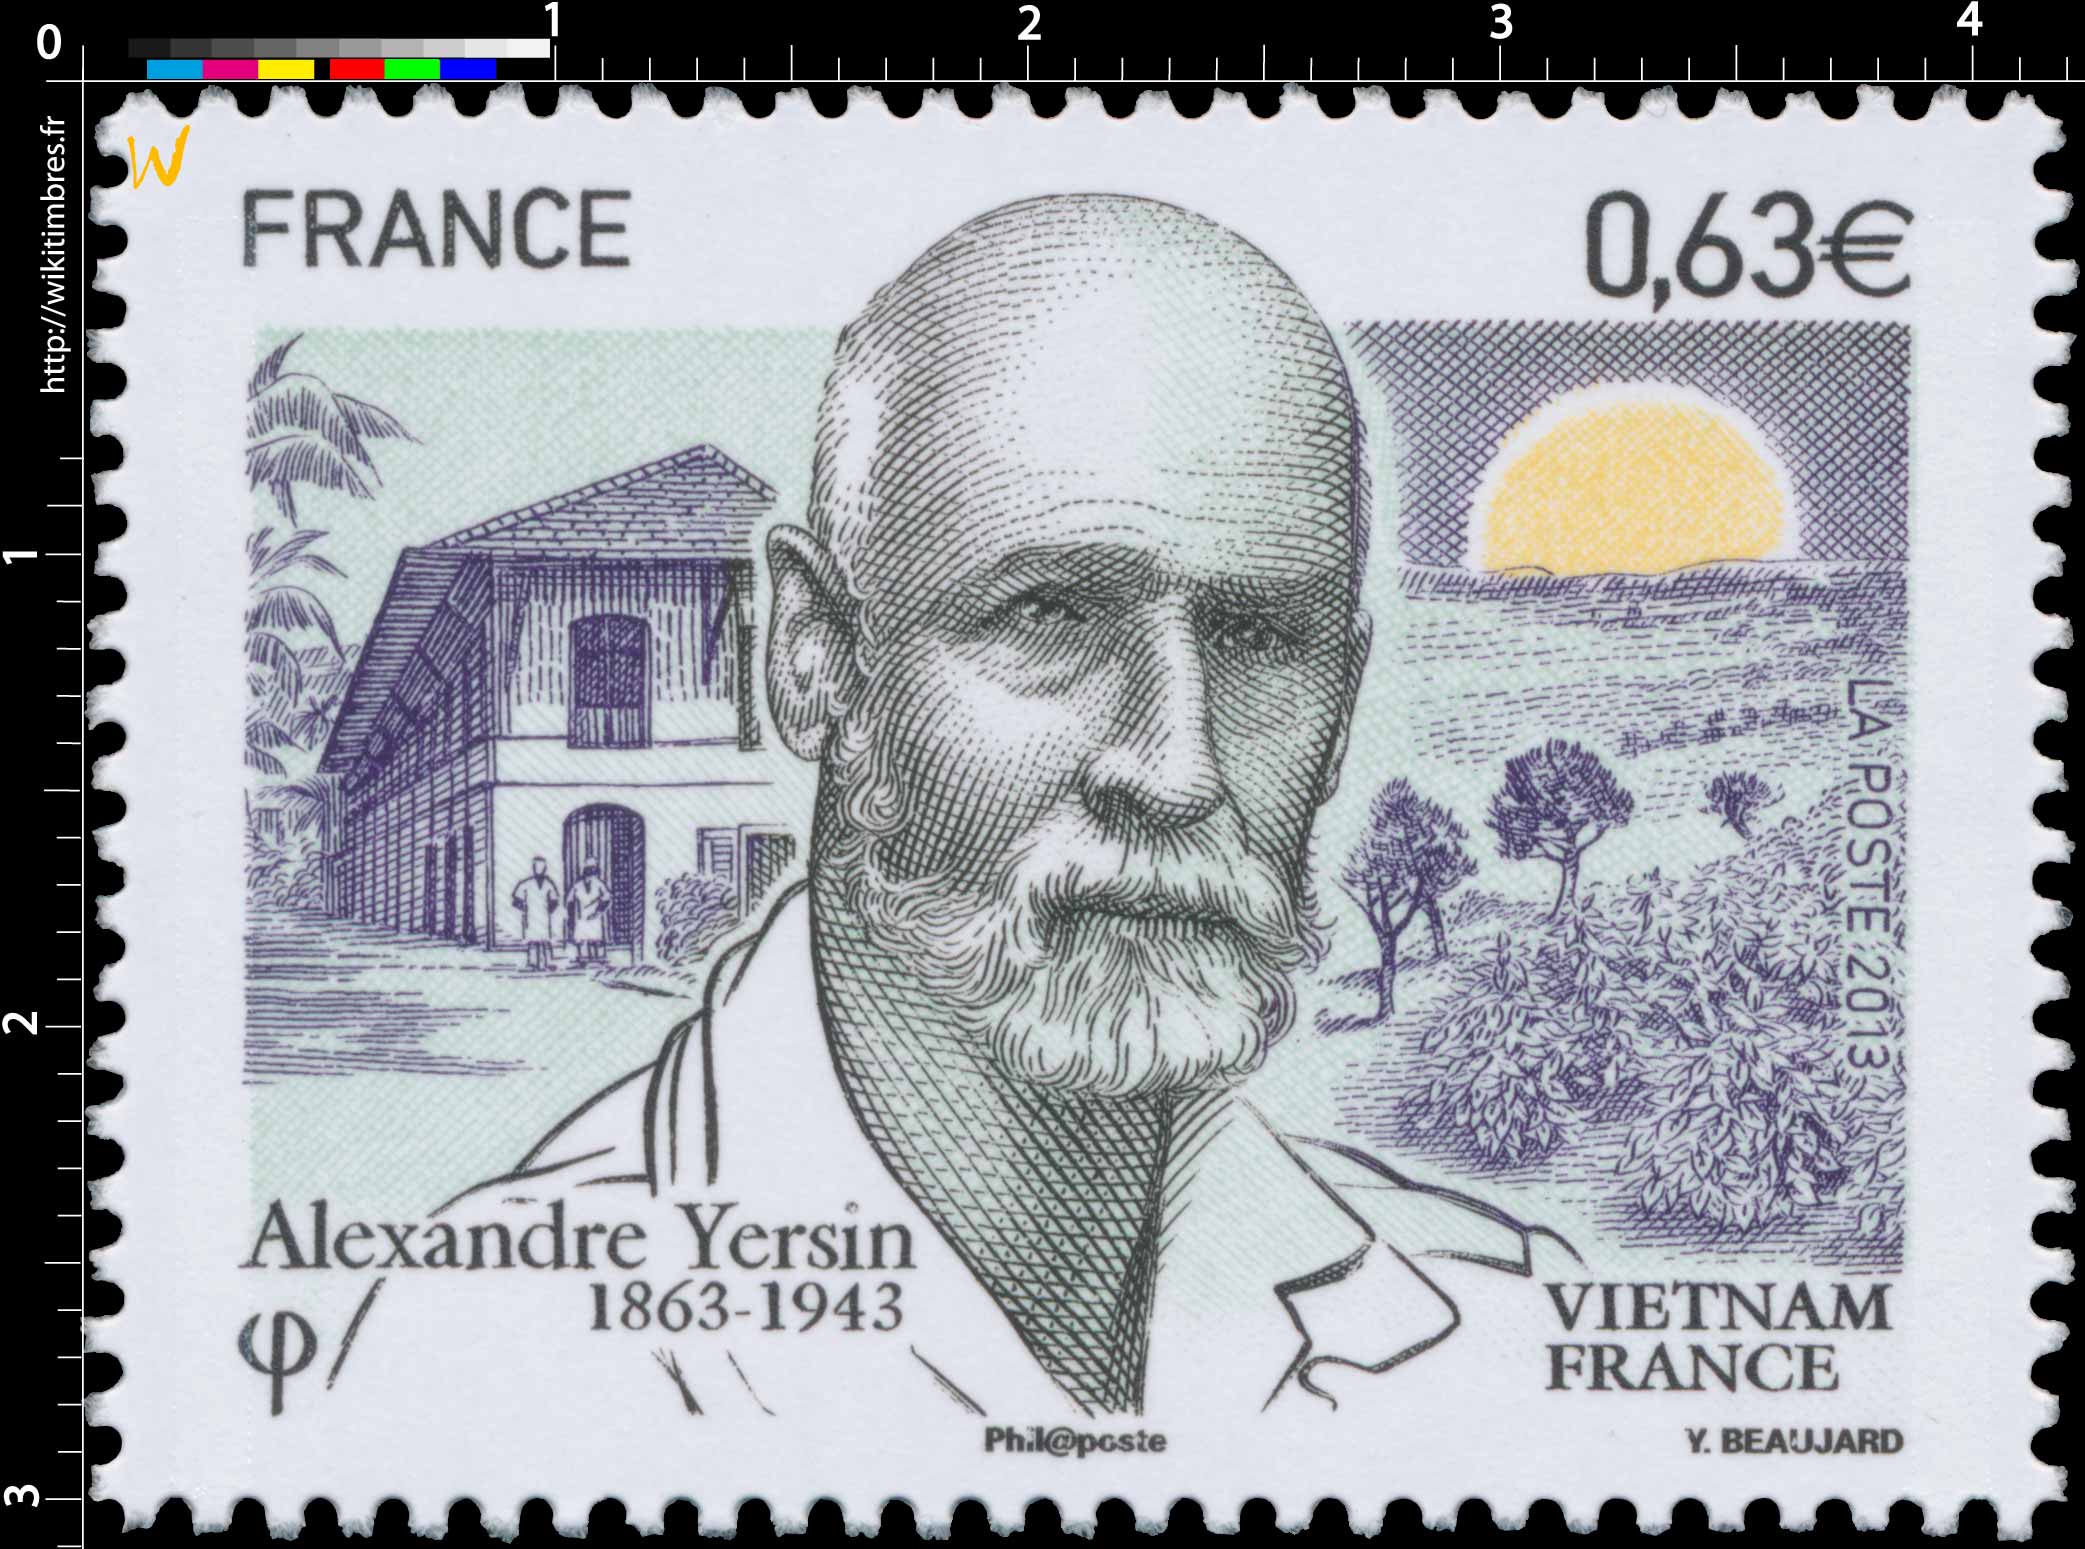 2013 Vietnam-France Alexandre Yersin 1863-1943